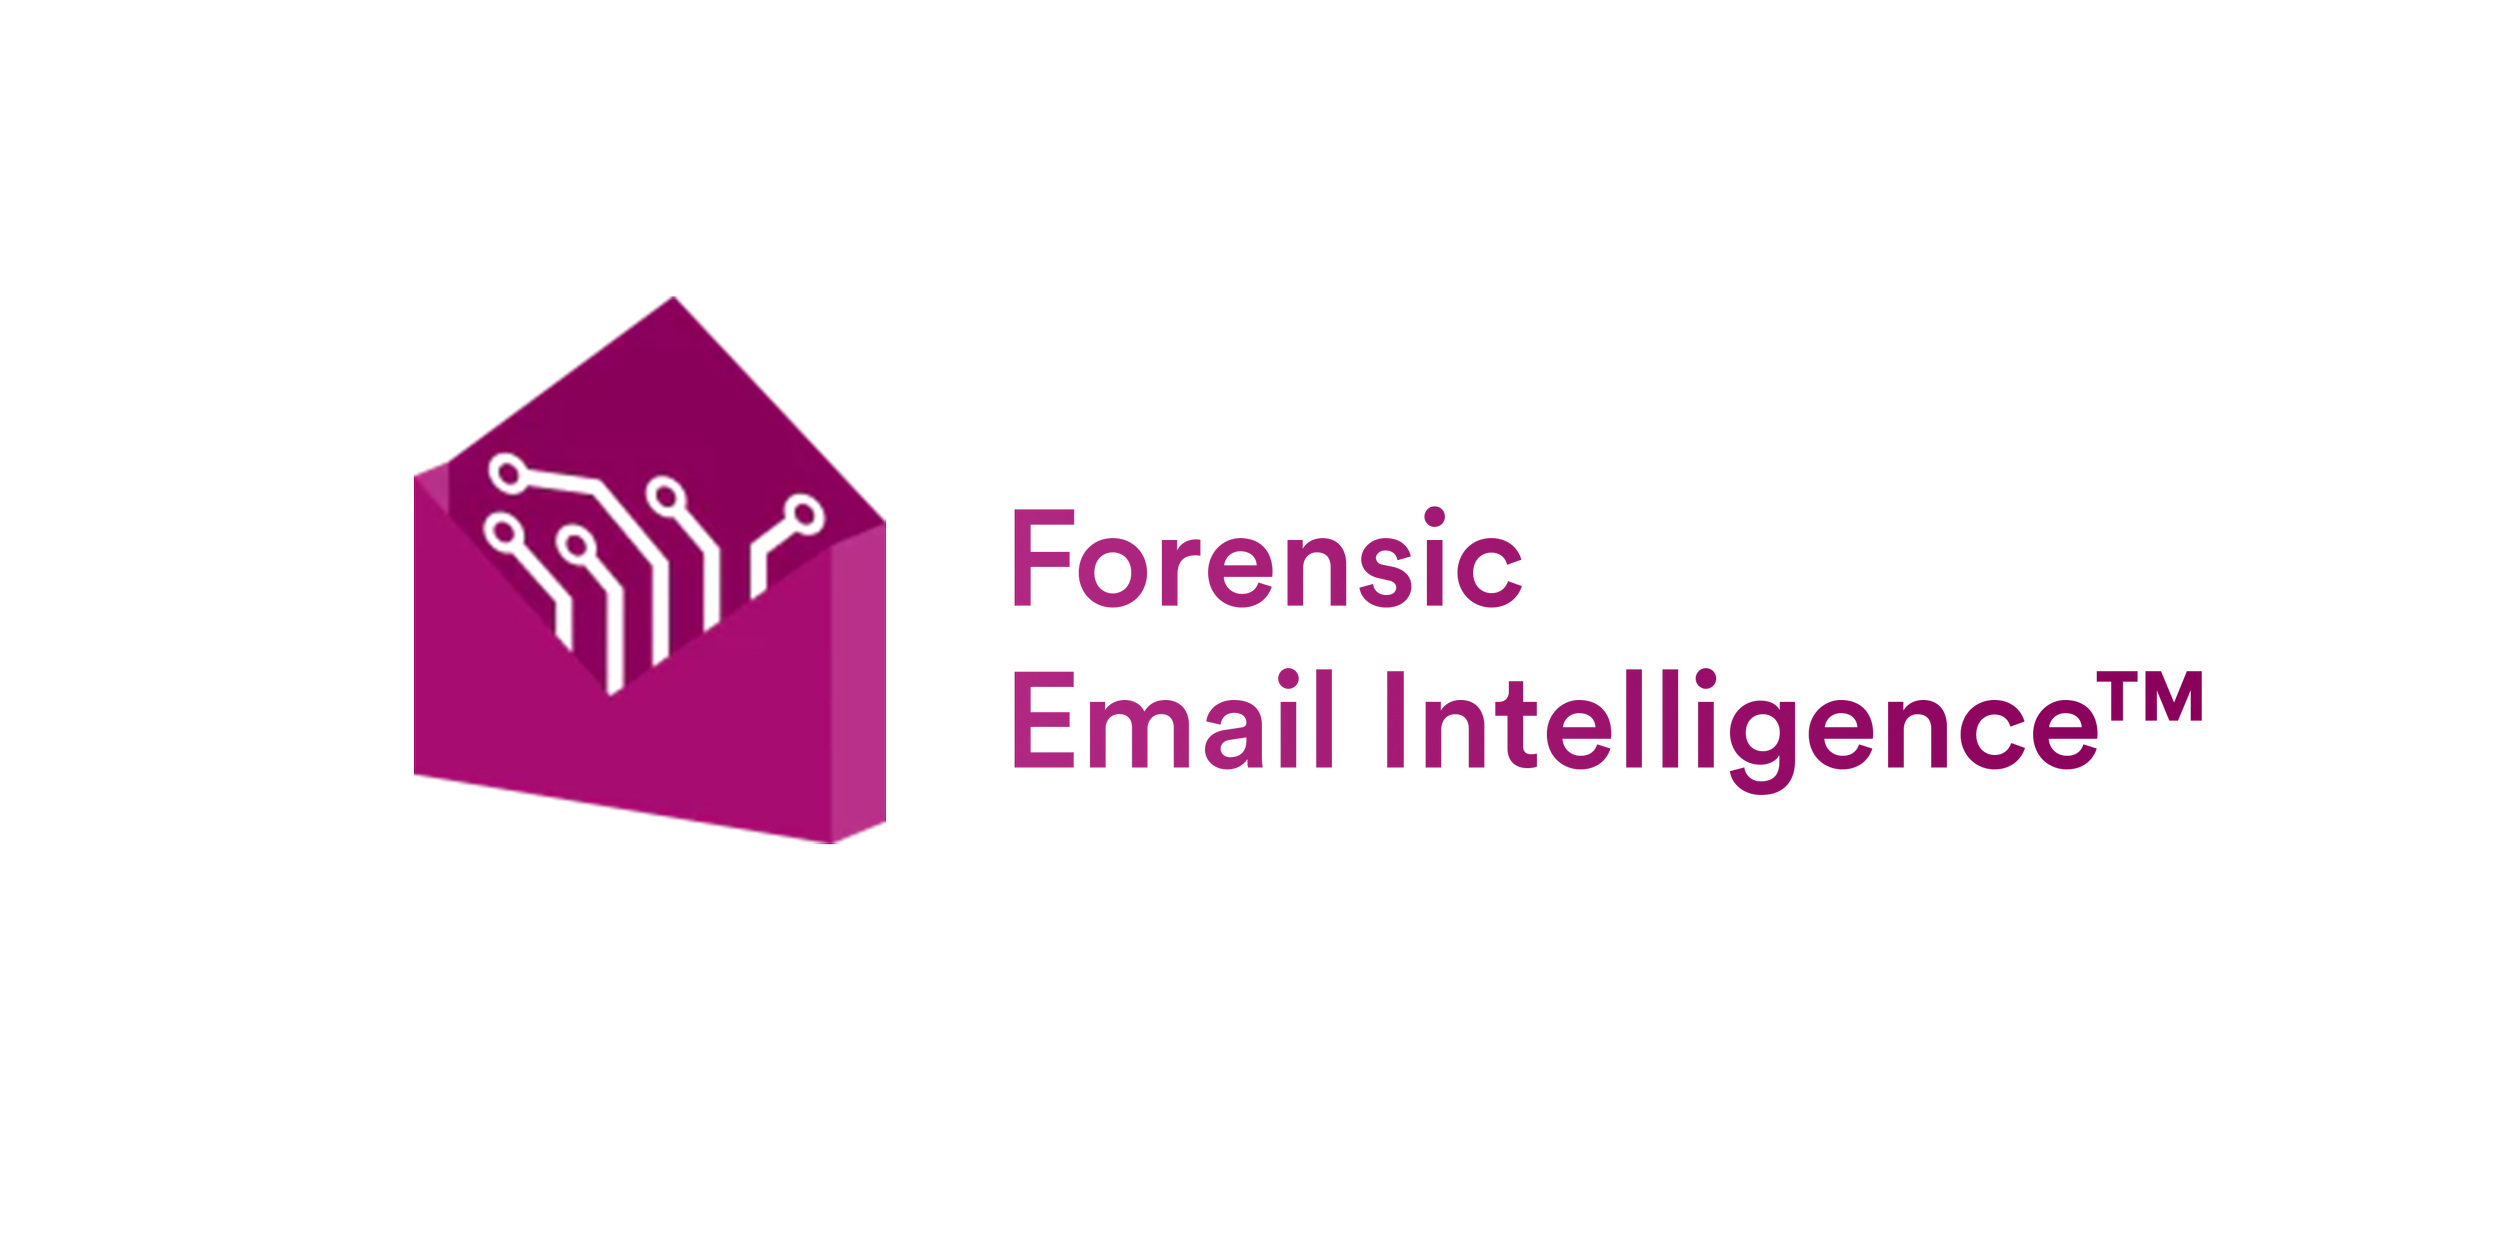 Avec Forensic Email Intelligence, faites une analyse en profondeur des emails